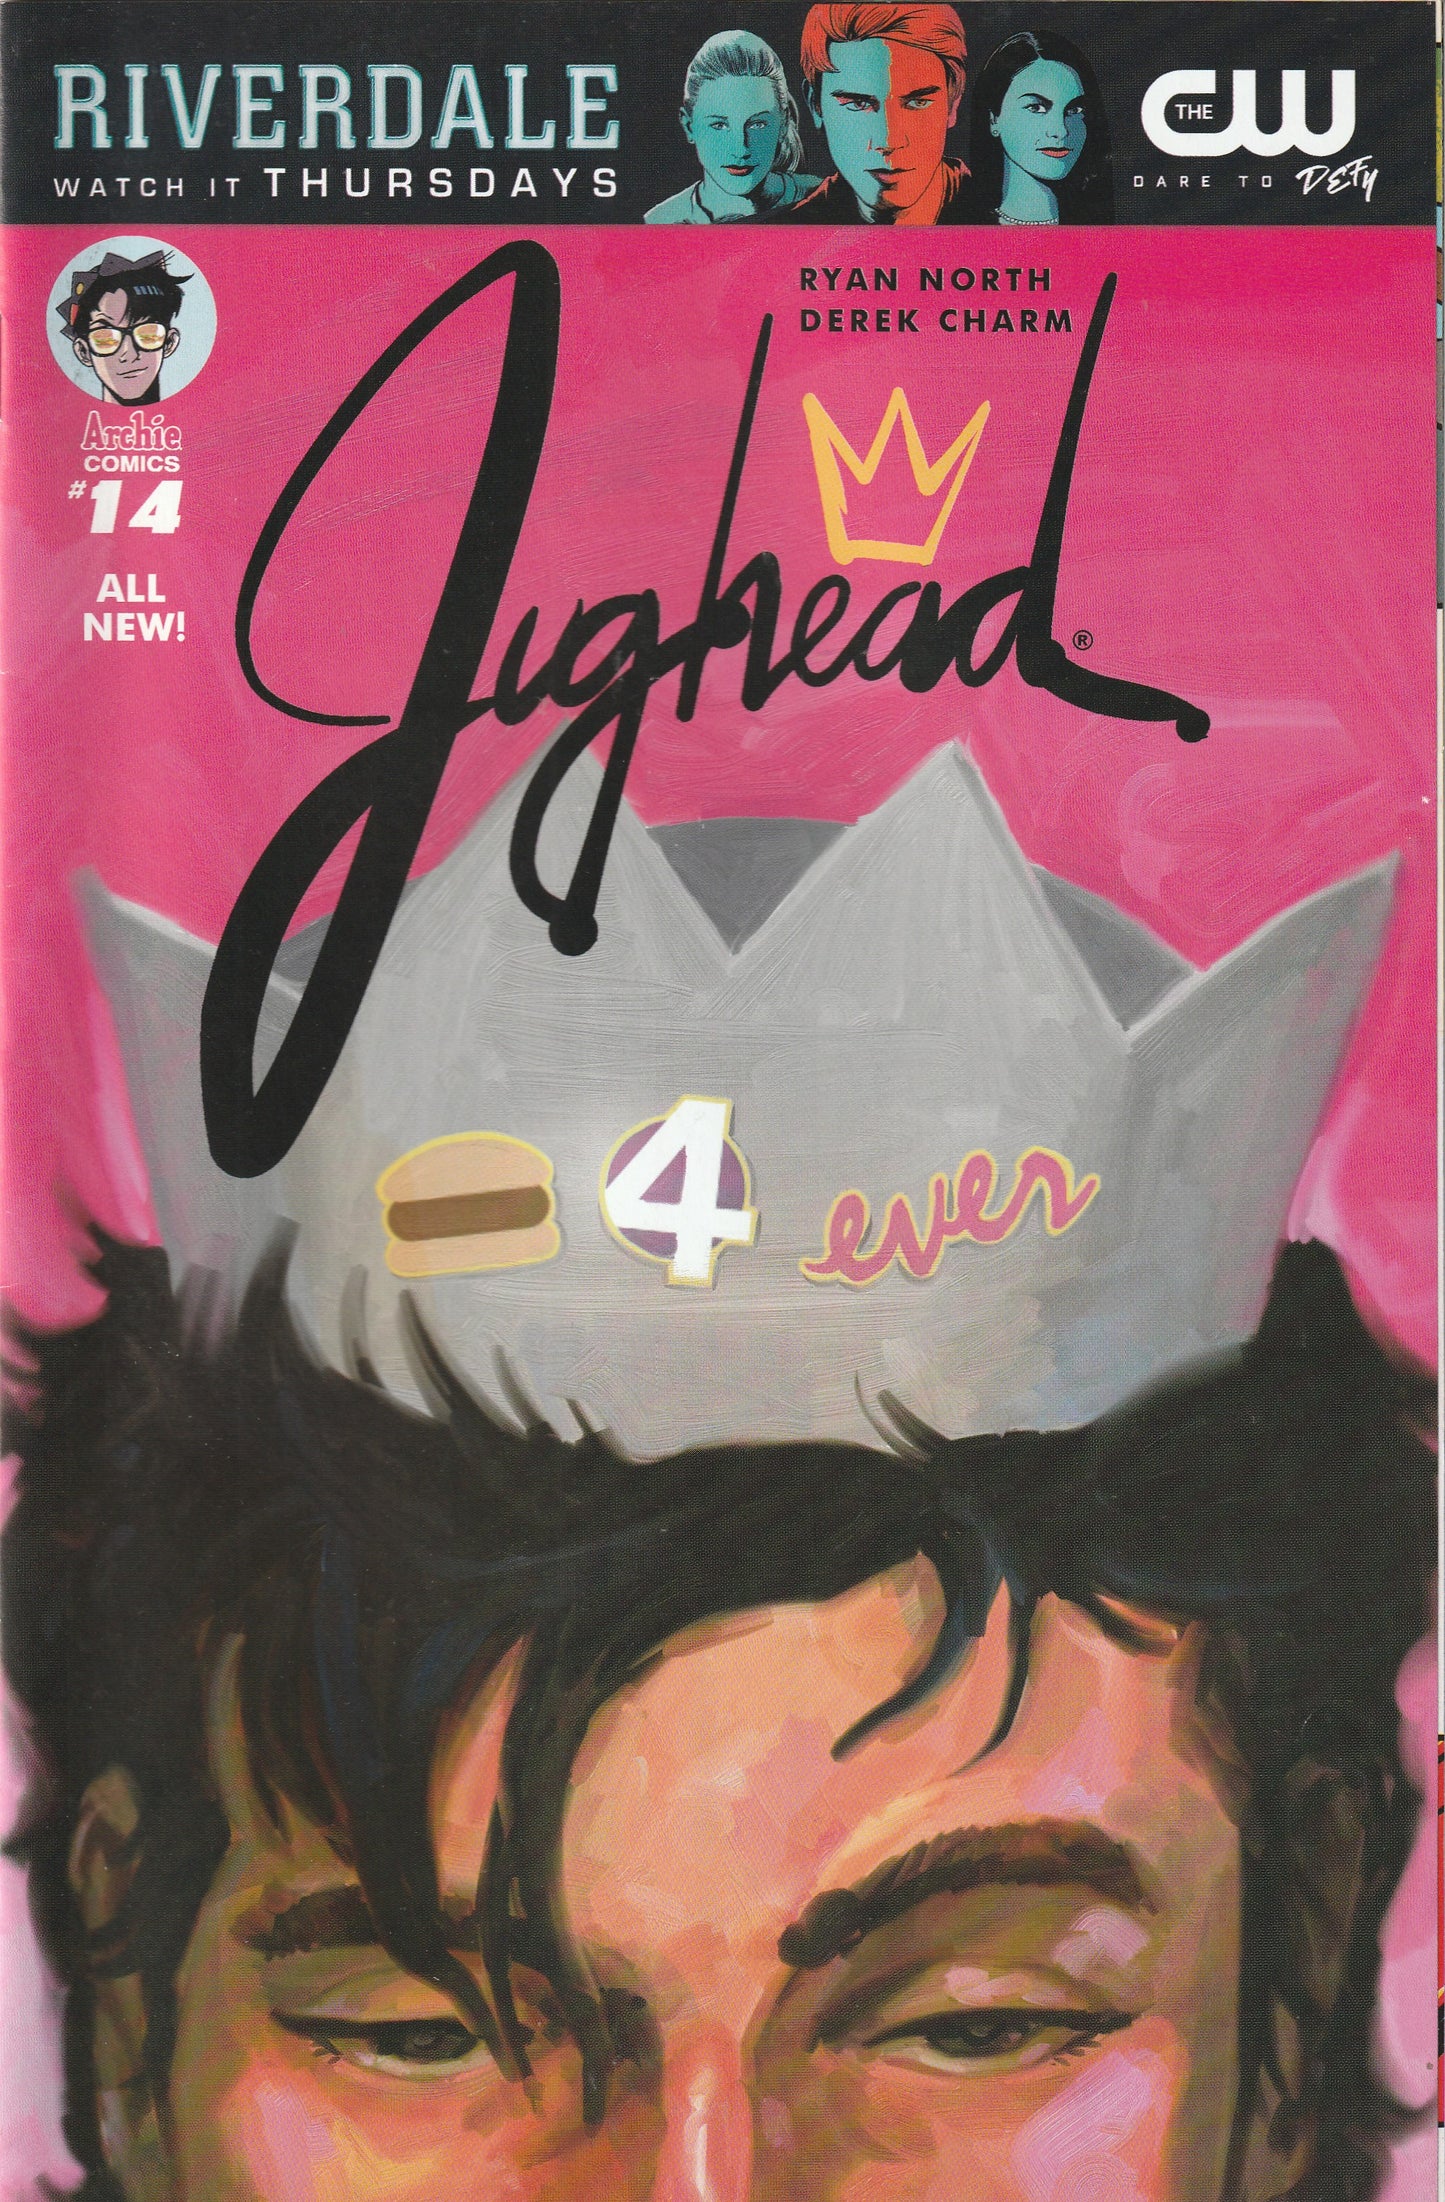 Jughead #14 (2017) - Chip Zdarsky Variant Cover